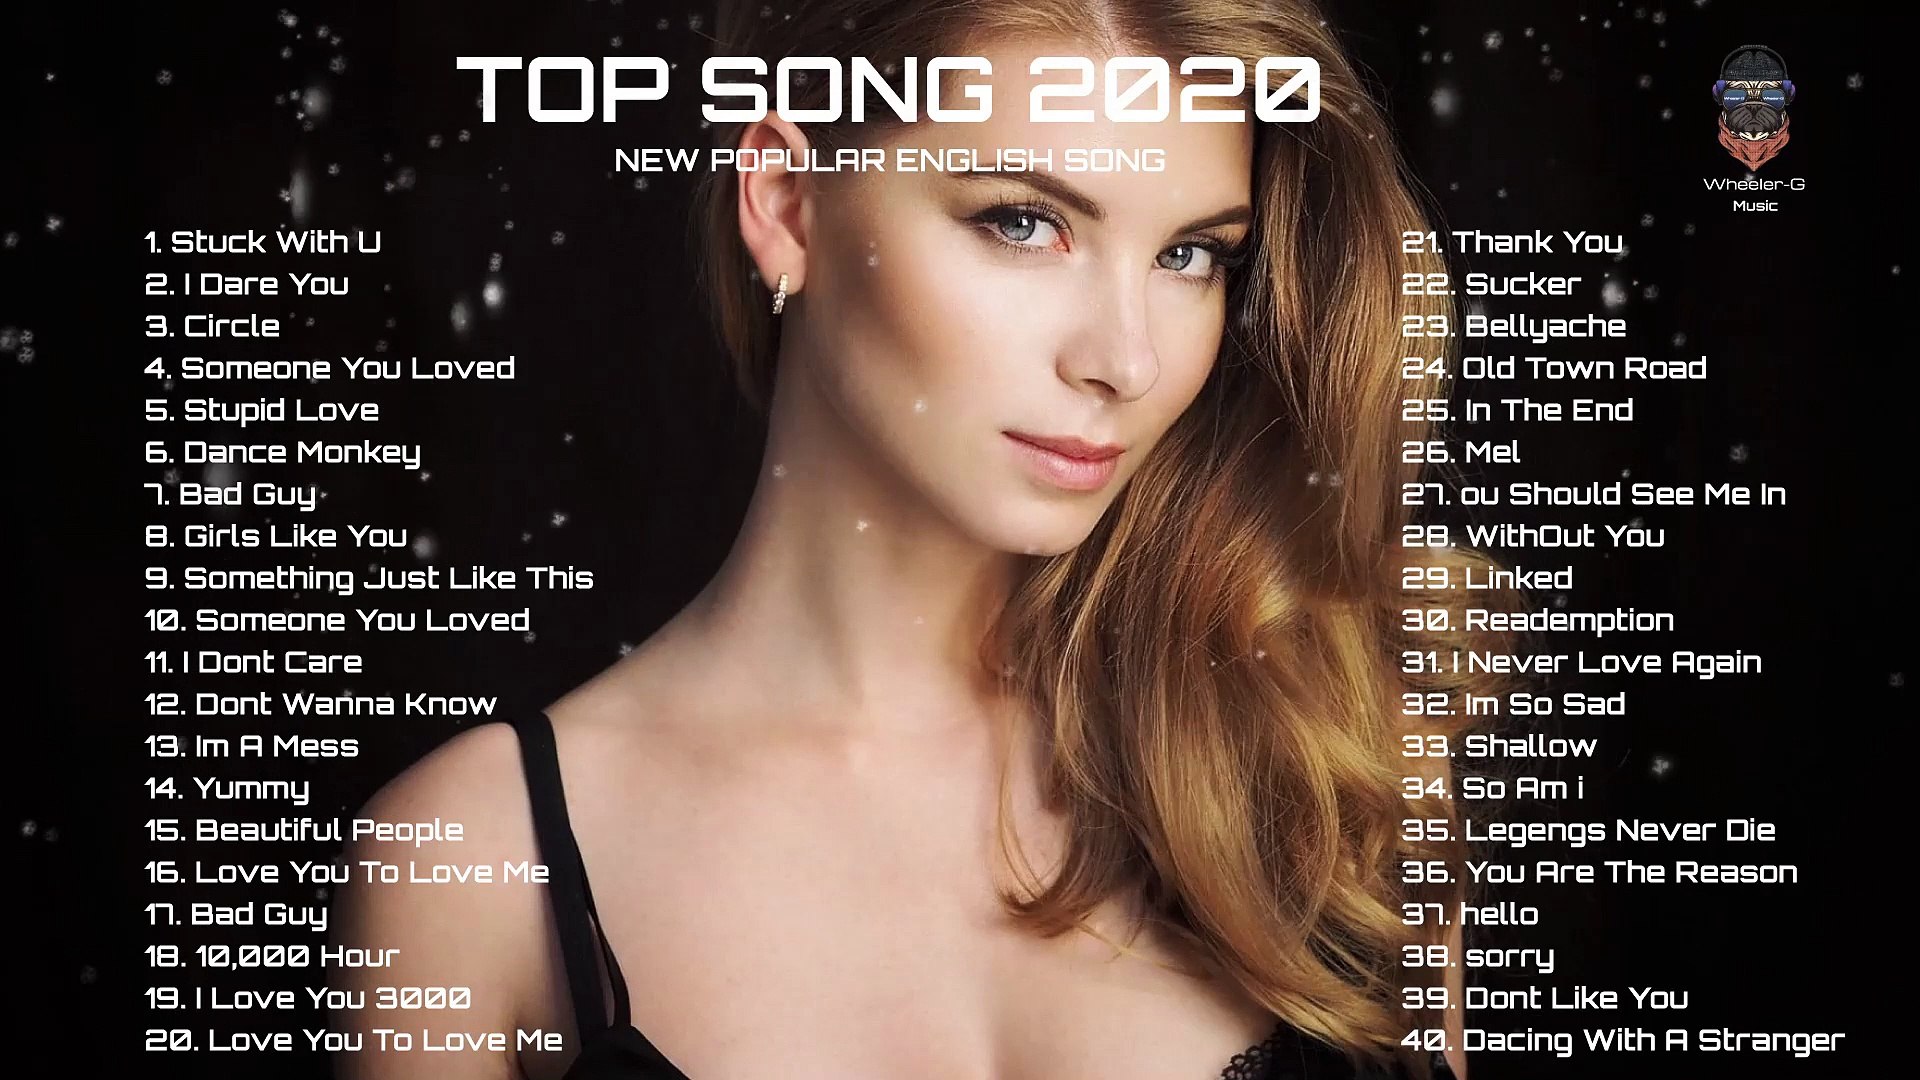 Music Top 50 Song - Music Billboard -   Music Top Songs 2020  - [Wheeler-G]